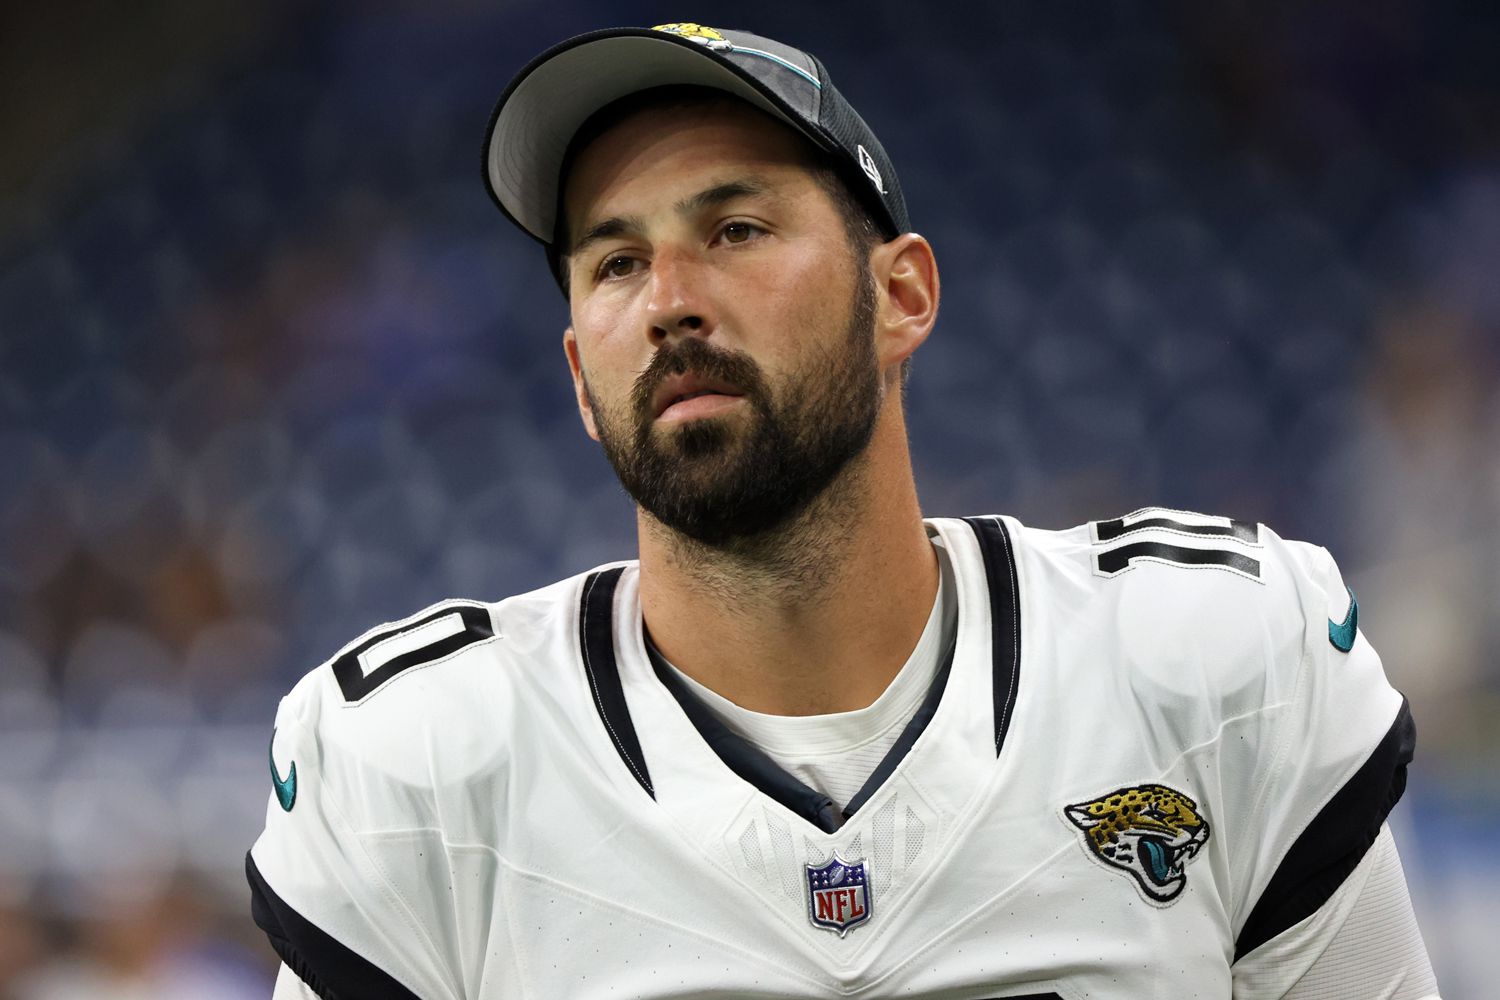 NFL Kicker Brandon McManus and Jacksonville Jaguars Face $1 Million Lawsuit